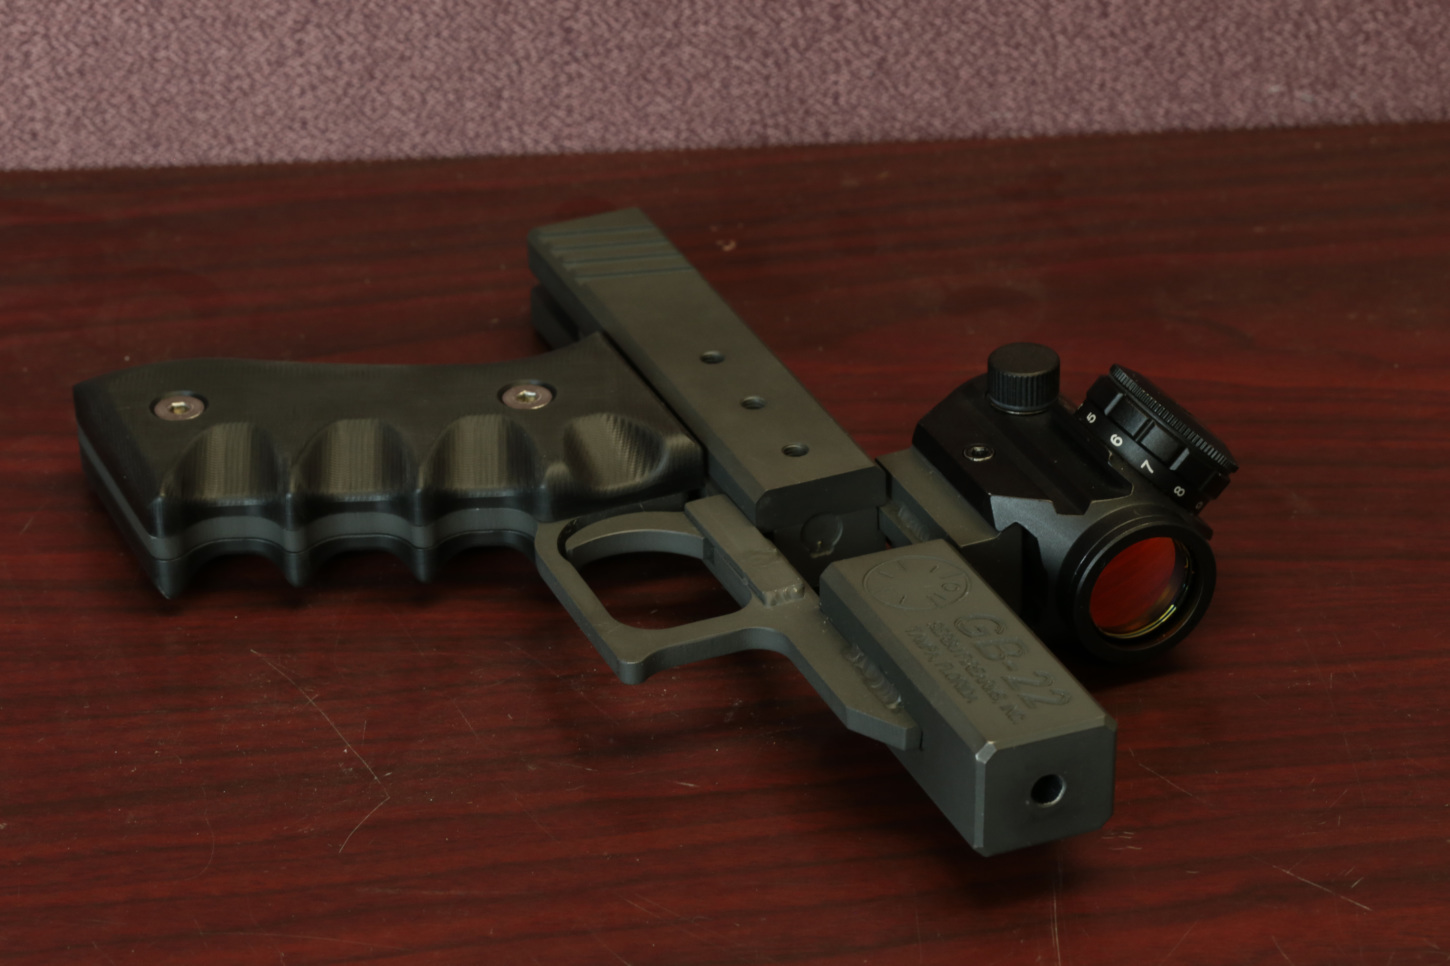 GB-22 22lr caliber single shot pistol from USA - Firearms, Pistols, 22lr, Longpost